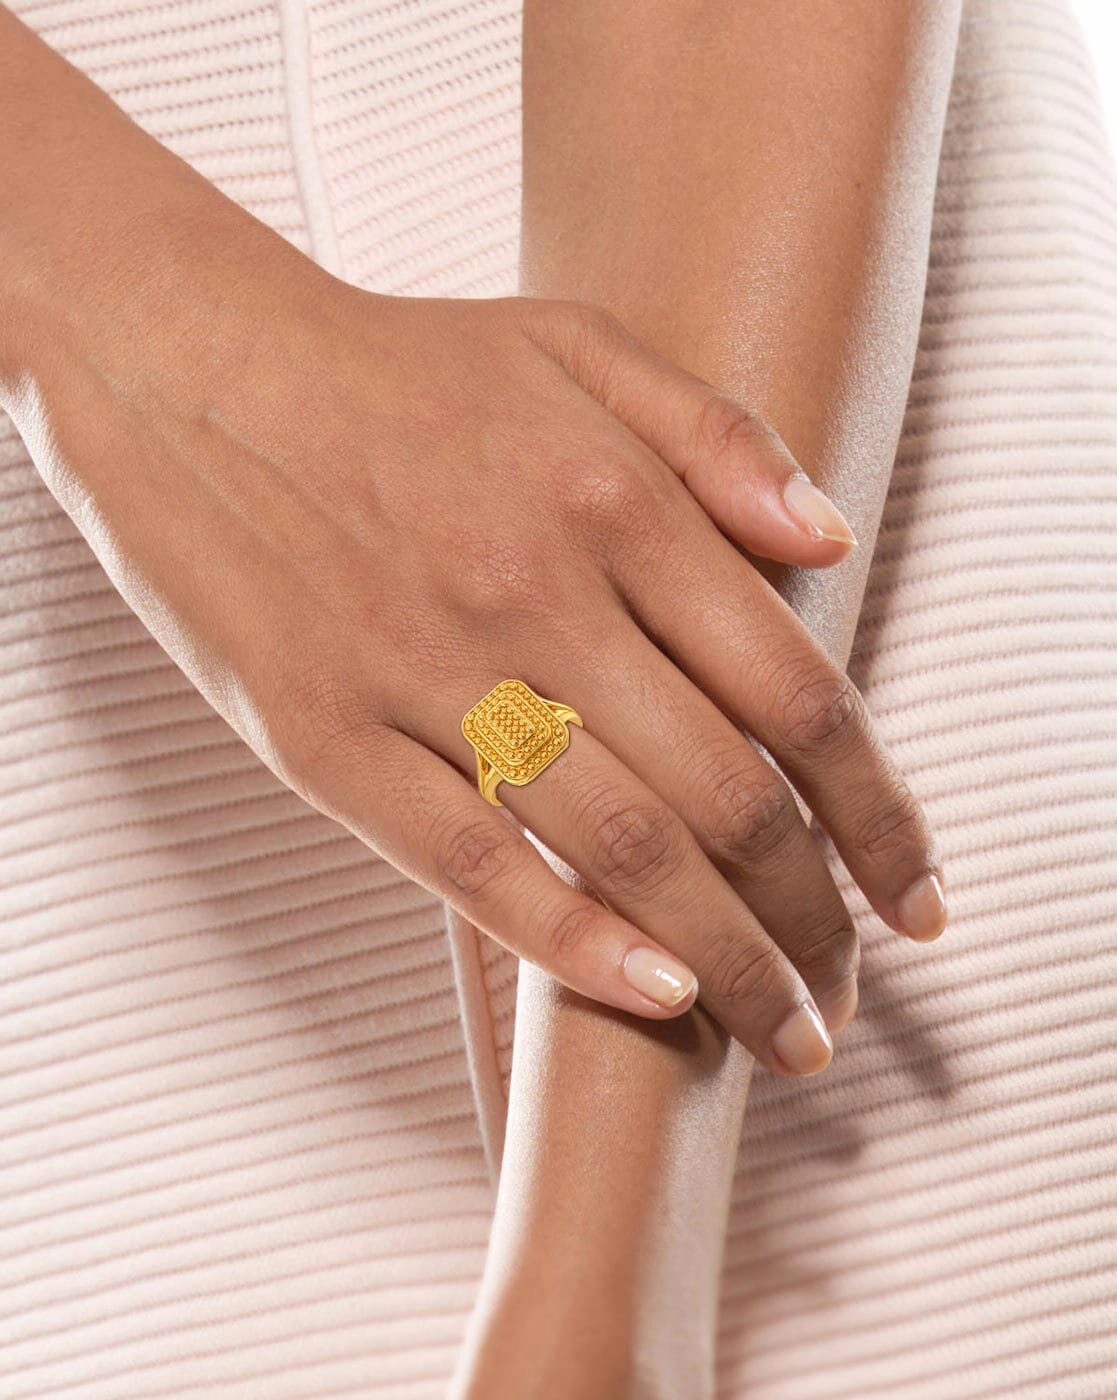 22K Yellow Gold Diamond Ring with a Stylish Belt Design | Pachchigar  Jewellers (Ashokbhai)